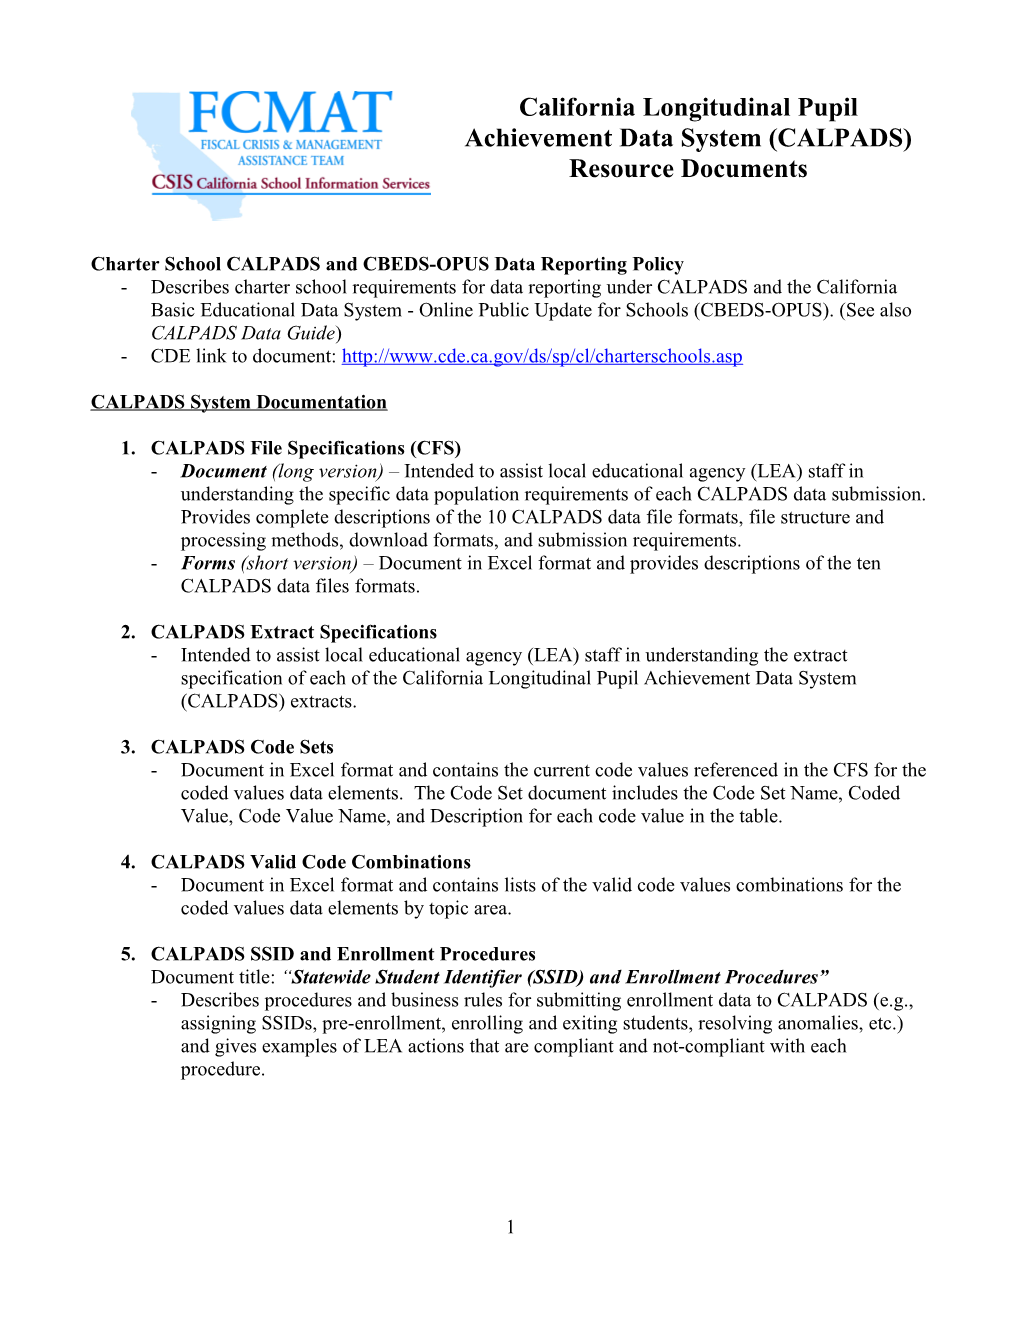 CALPADS Resource Documents